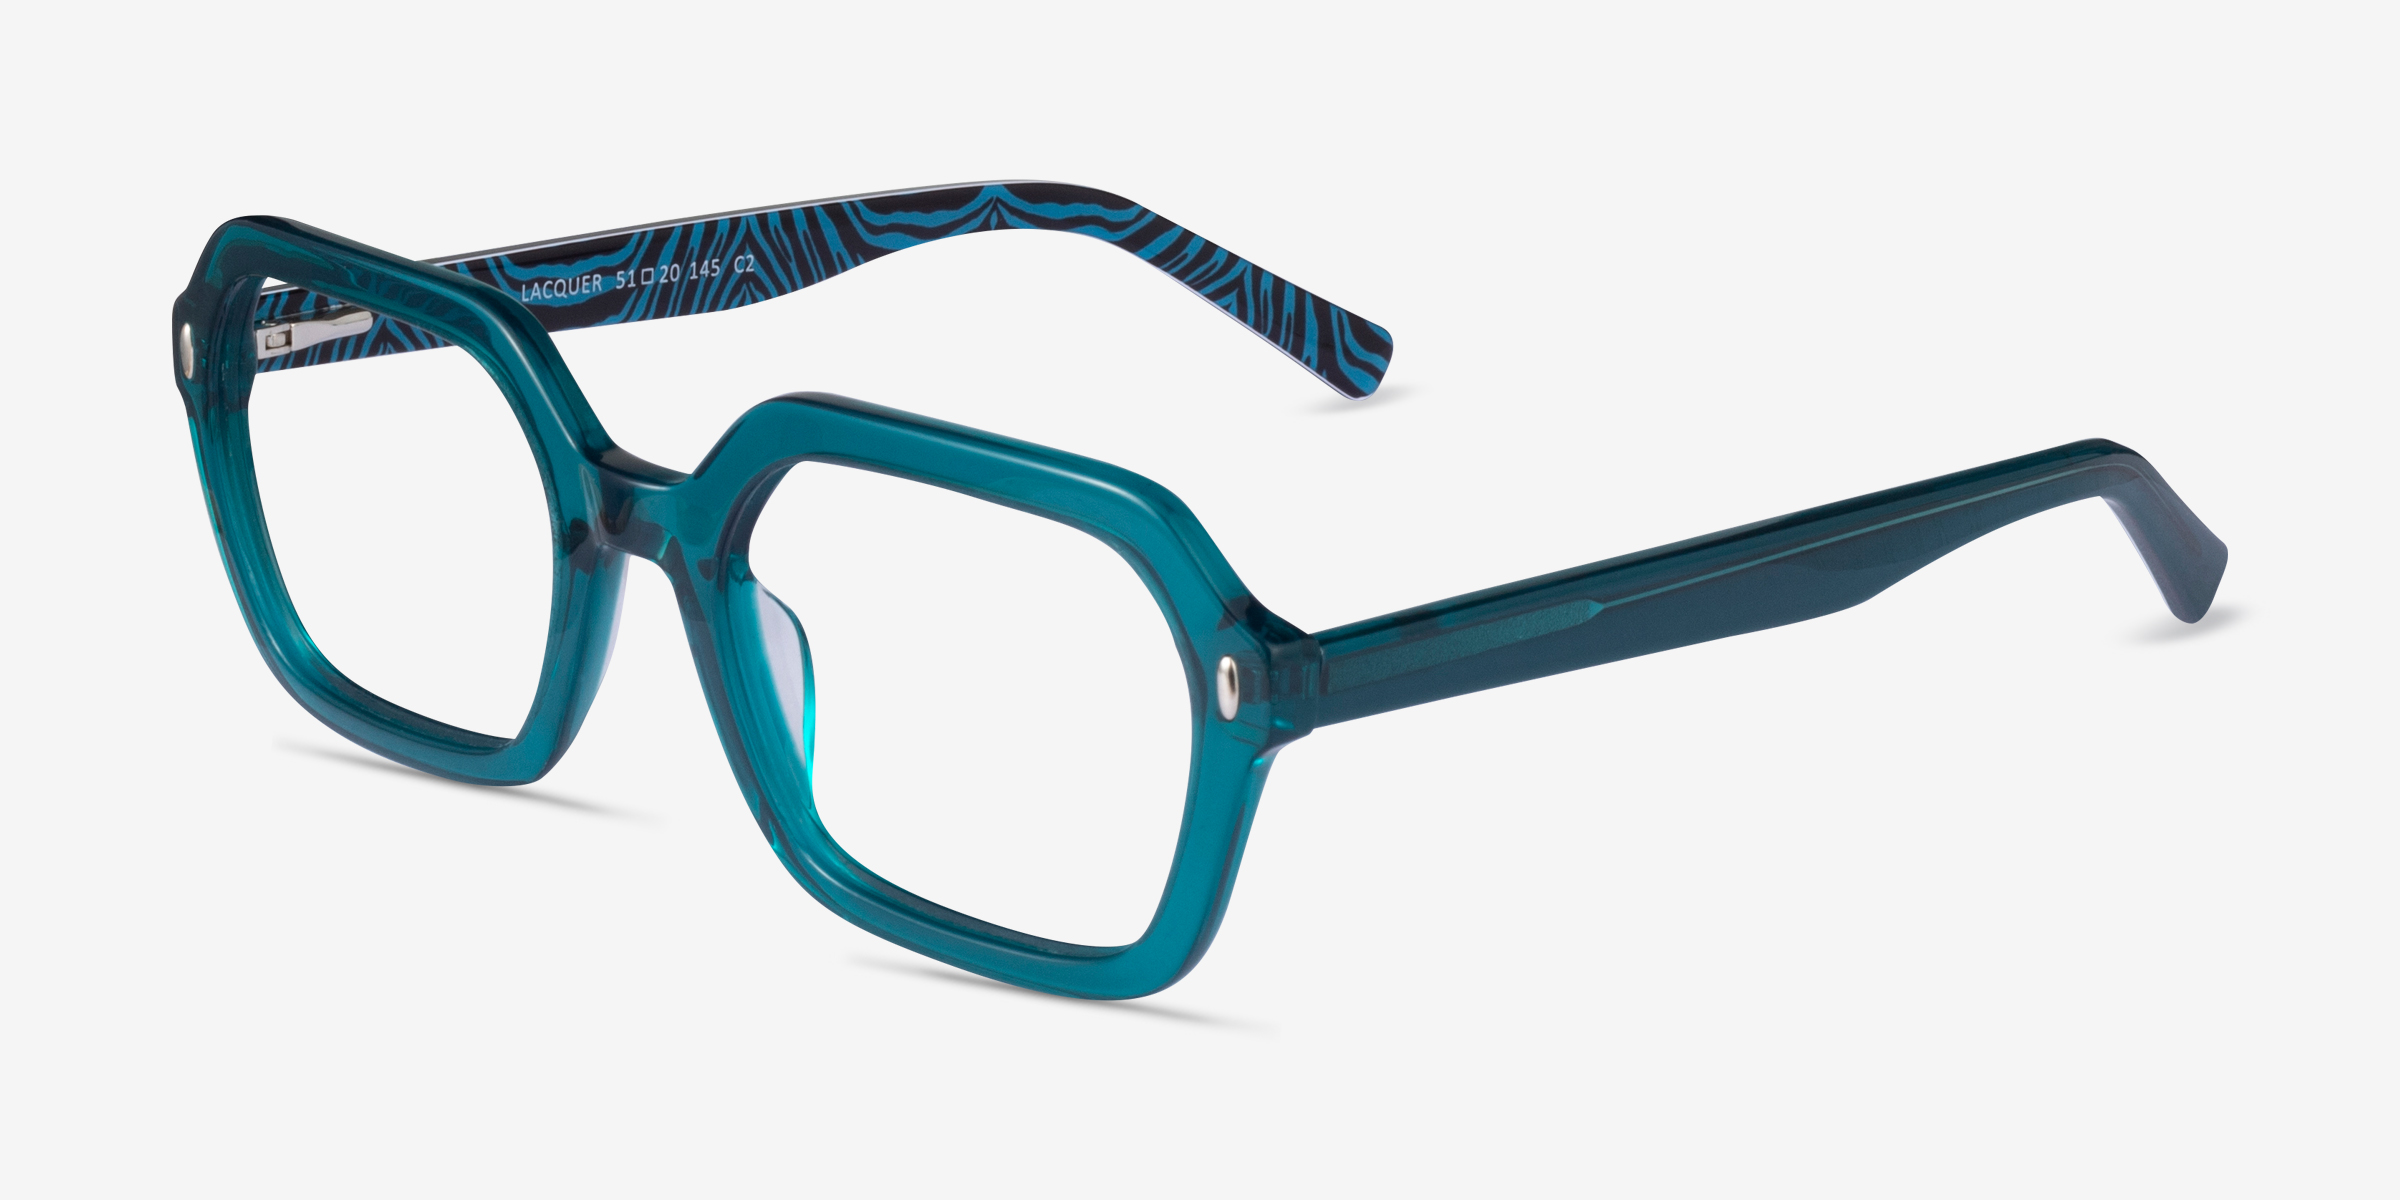 Lacquer Rectangle Crystal Green Full Rim Eyeglasses | Eyebuydirect